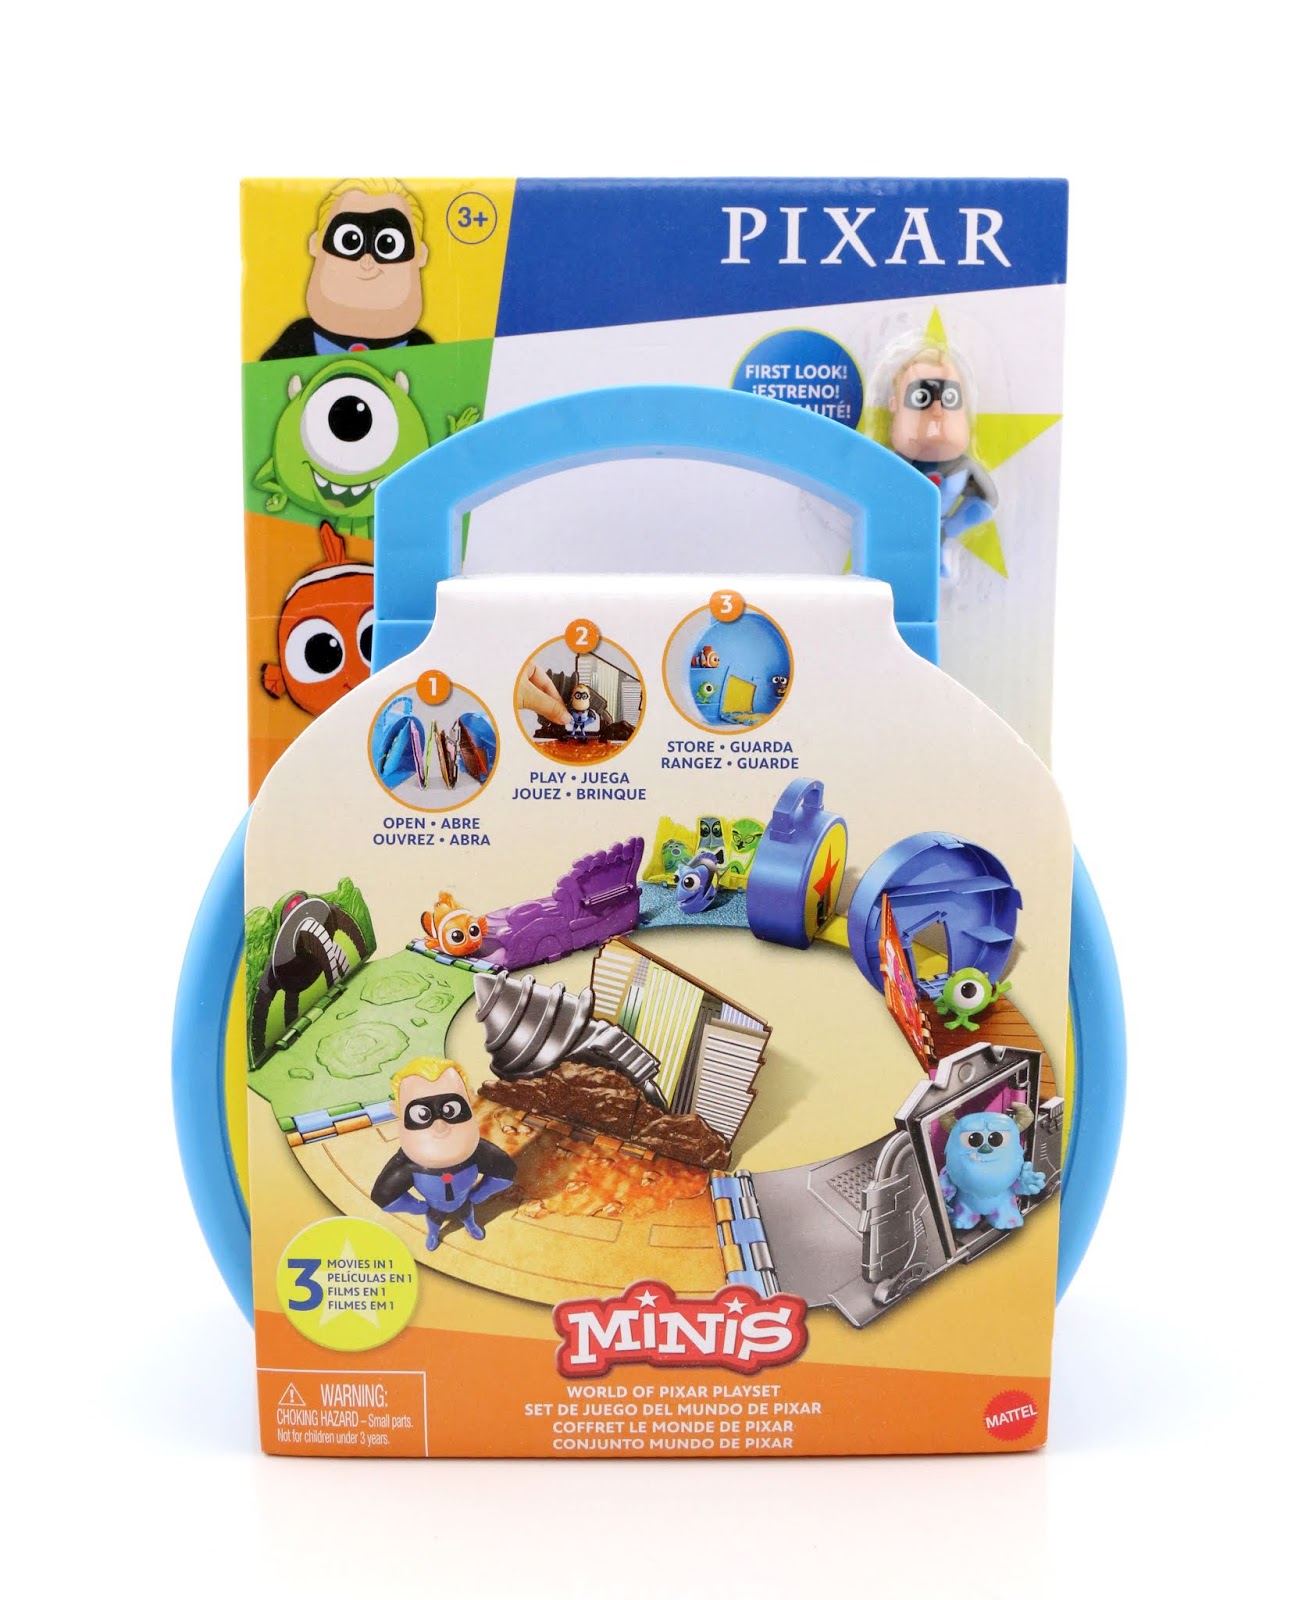 Mattel Pixar Minis "World of Pixar Playset" Review 